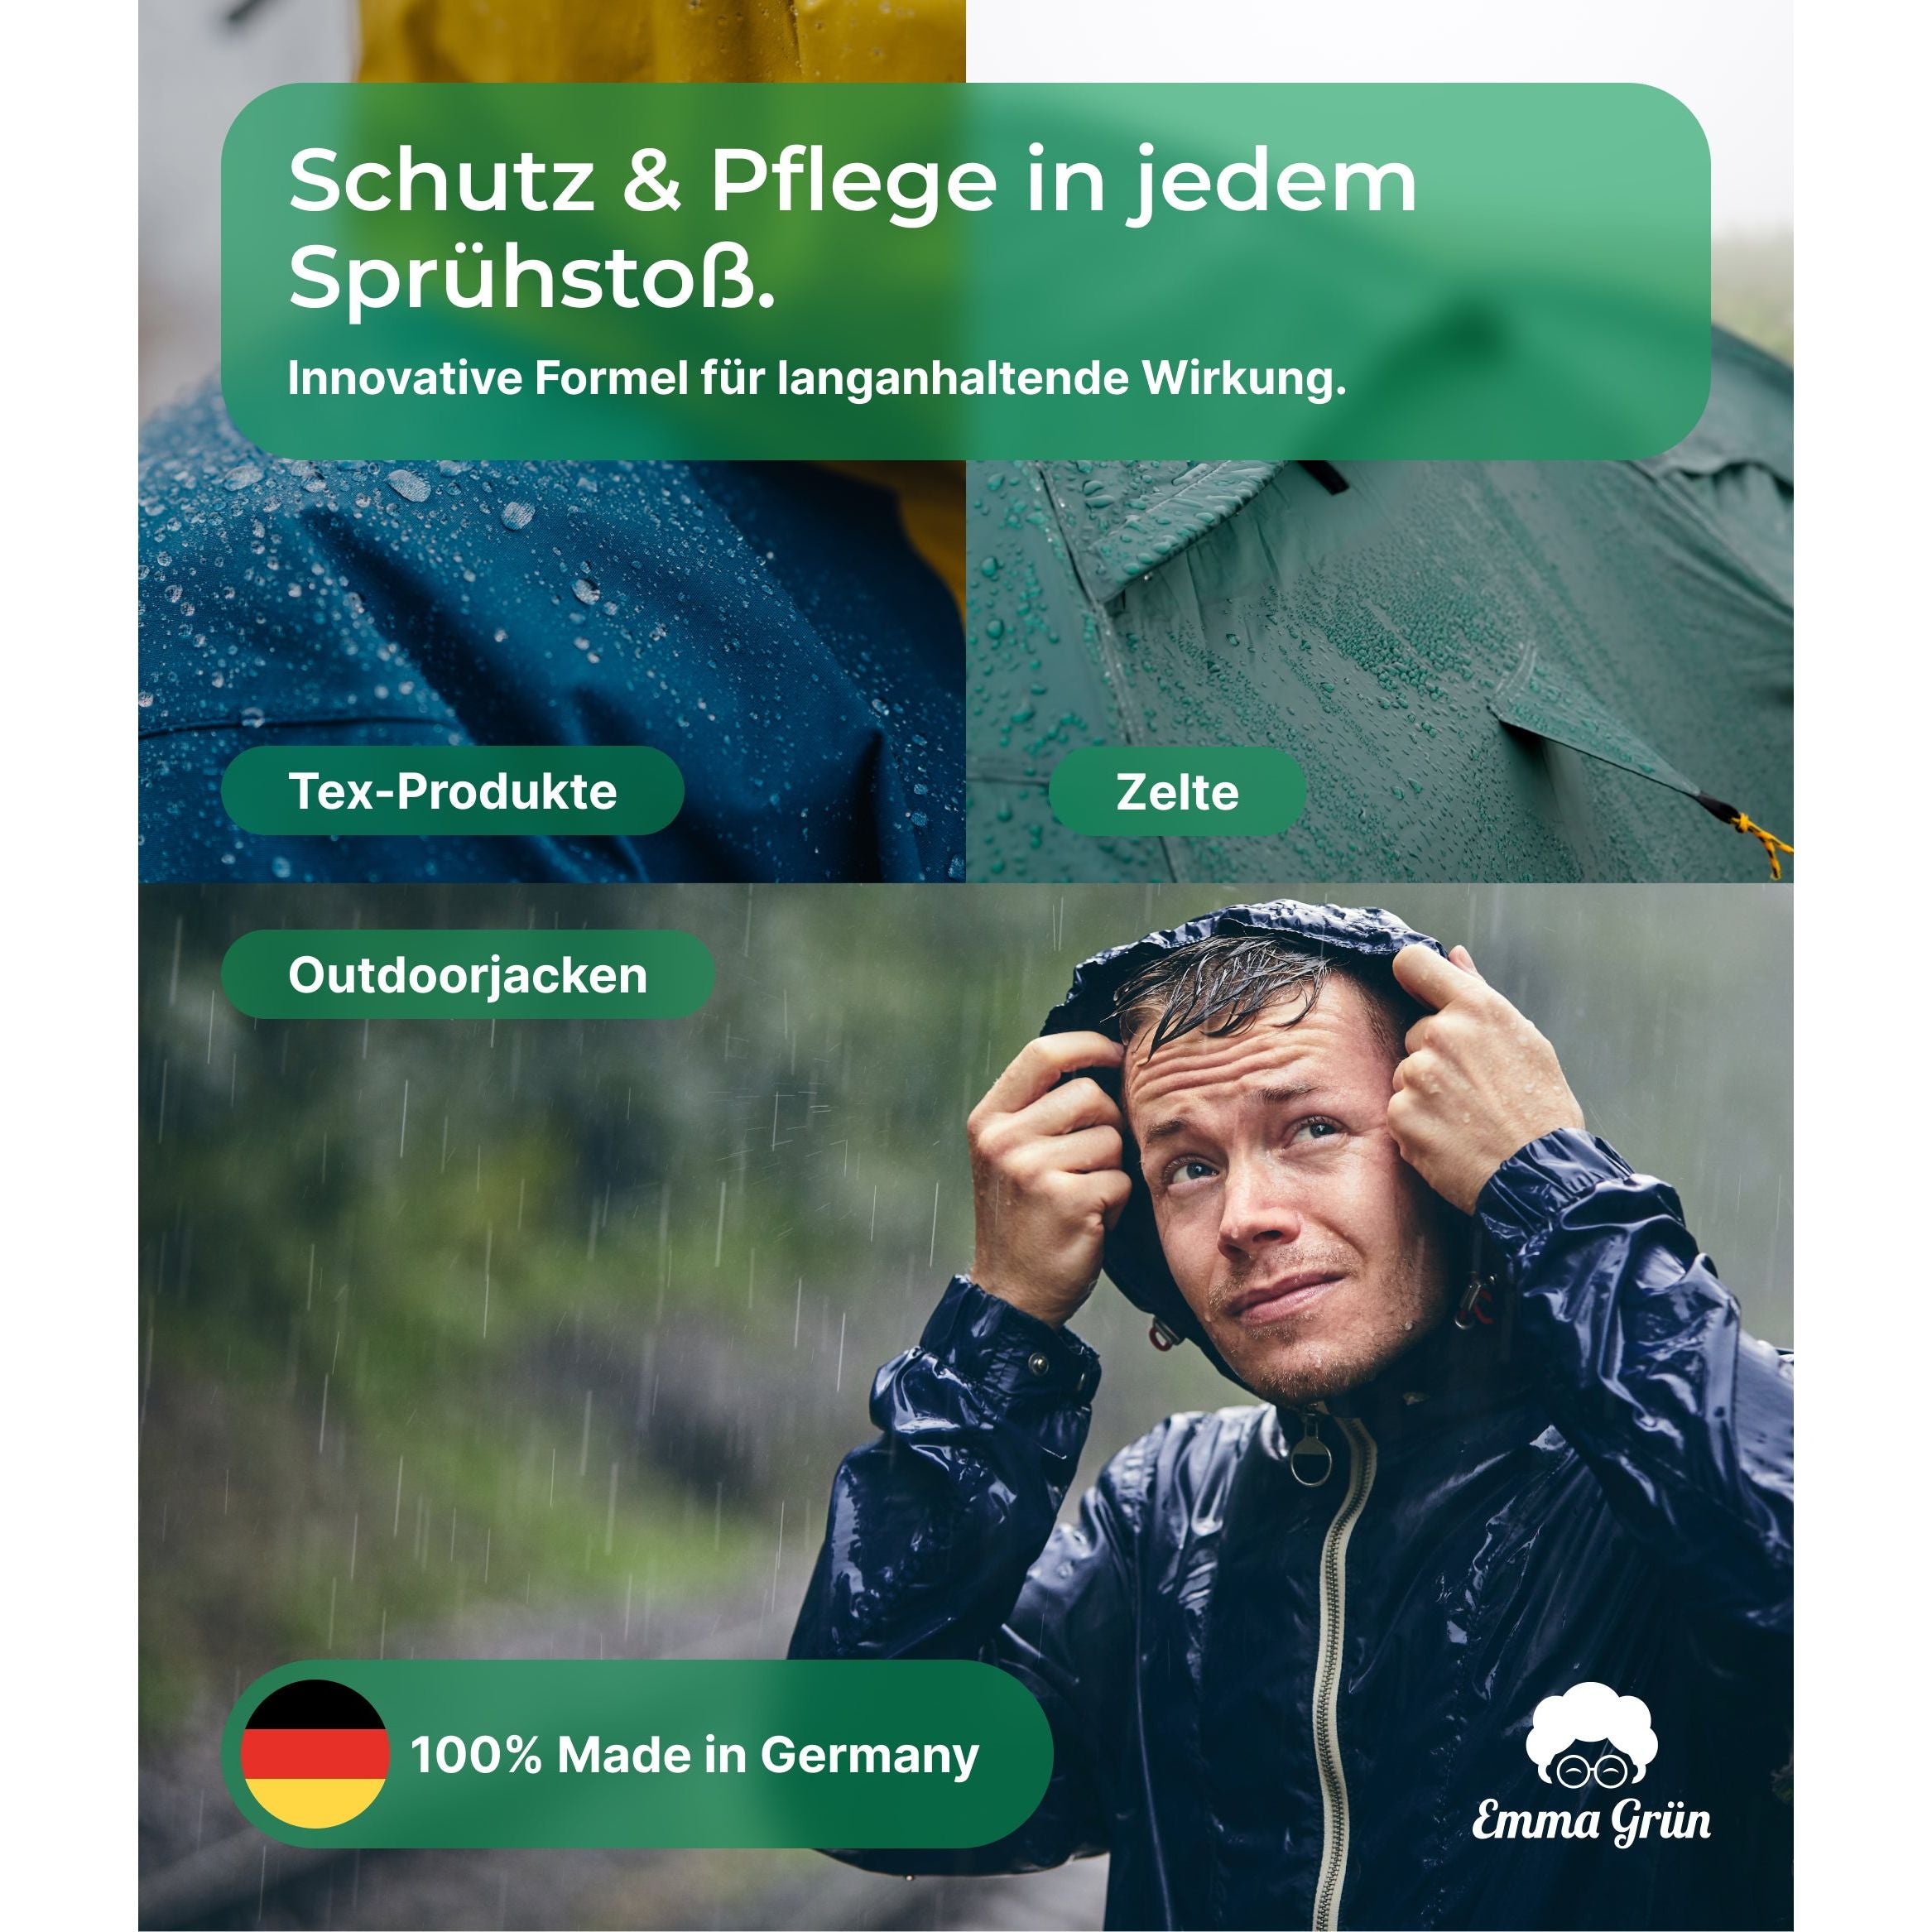 "Sauber & imprägniert" Wildleder Spar-Set mit Lederreiniger & Imprägnierer